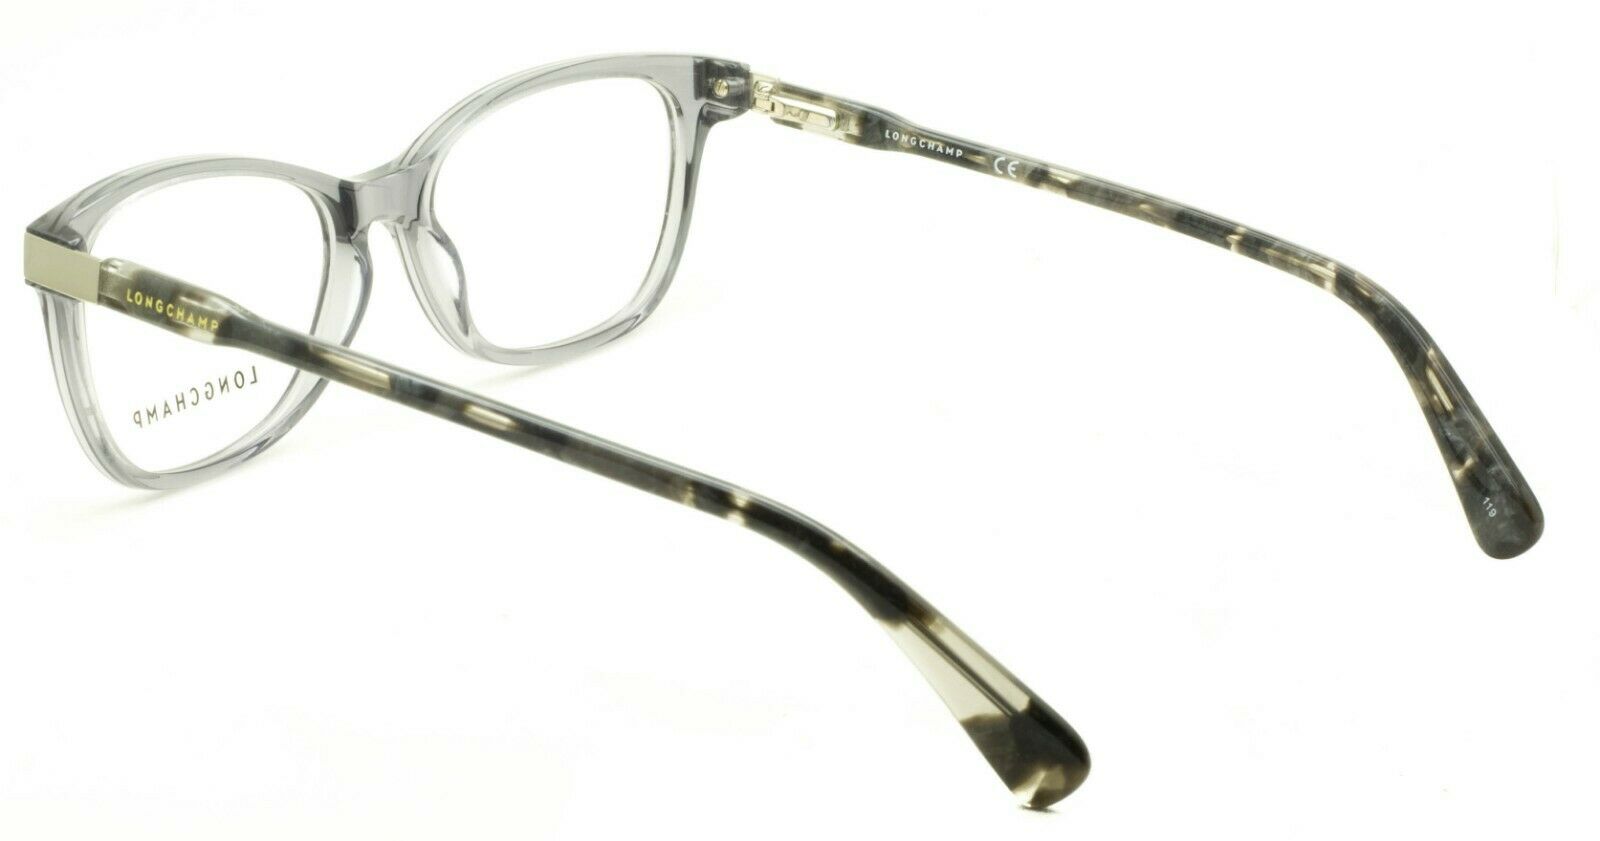 LONGCHAMP LO2616 035 53mm Eyewear FRAMES Glasses RX Optical Eyeglasses - New